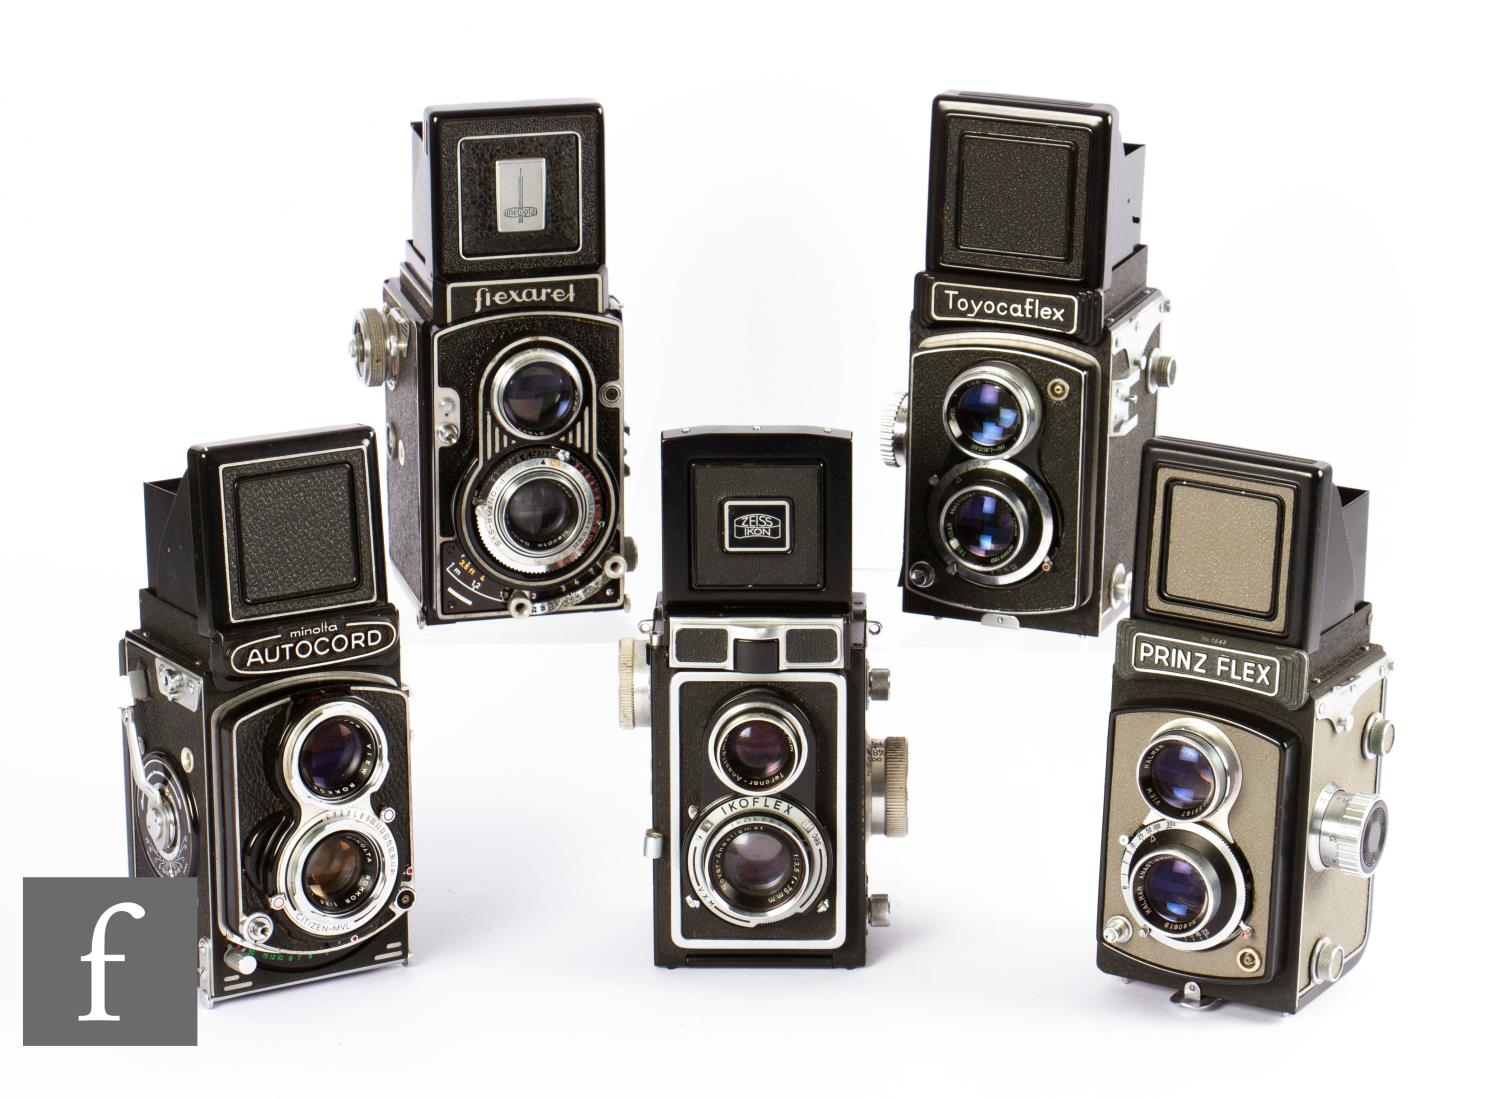 A collection of various TLR cameras, to include a Flexaret, Minolta Autocord, Ikoflex, Toyocaflex